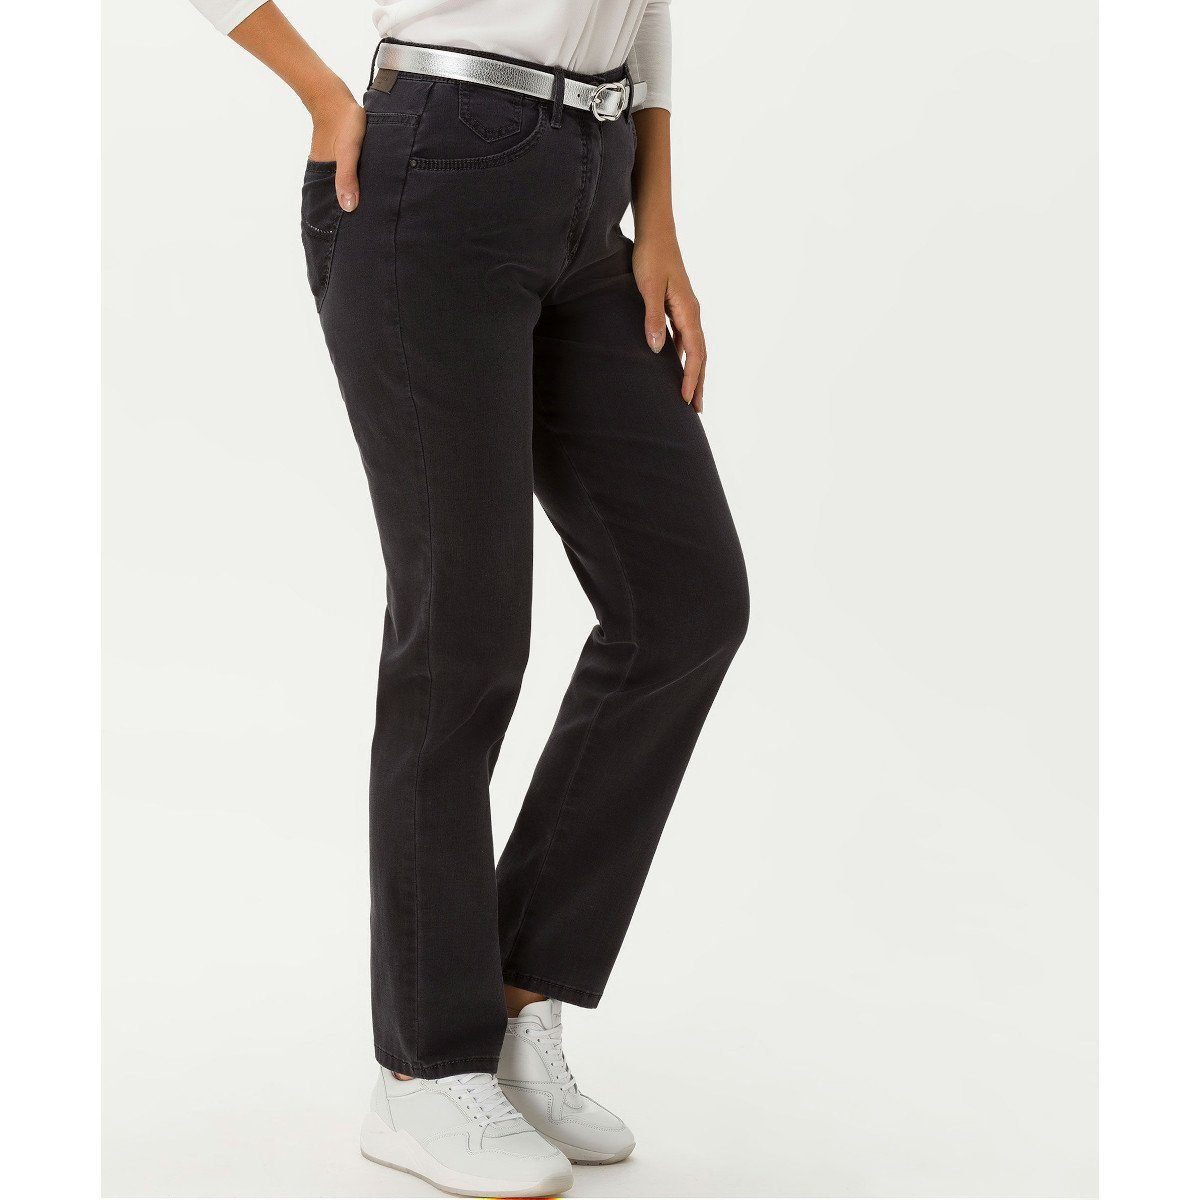 RAPHAELA by BRAX 5-Pocket-Jeans Corry (08) FIT Comfort Plus grau Fay 15-6227 COMFORT